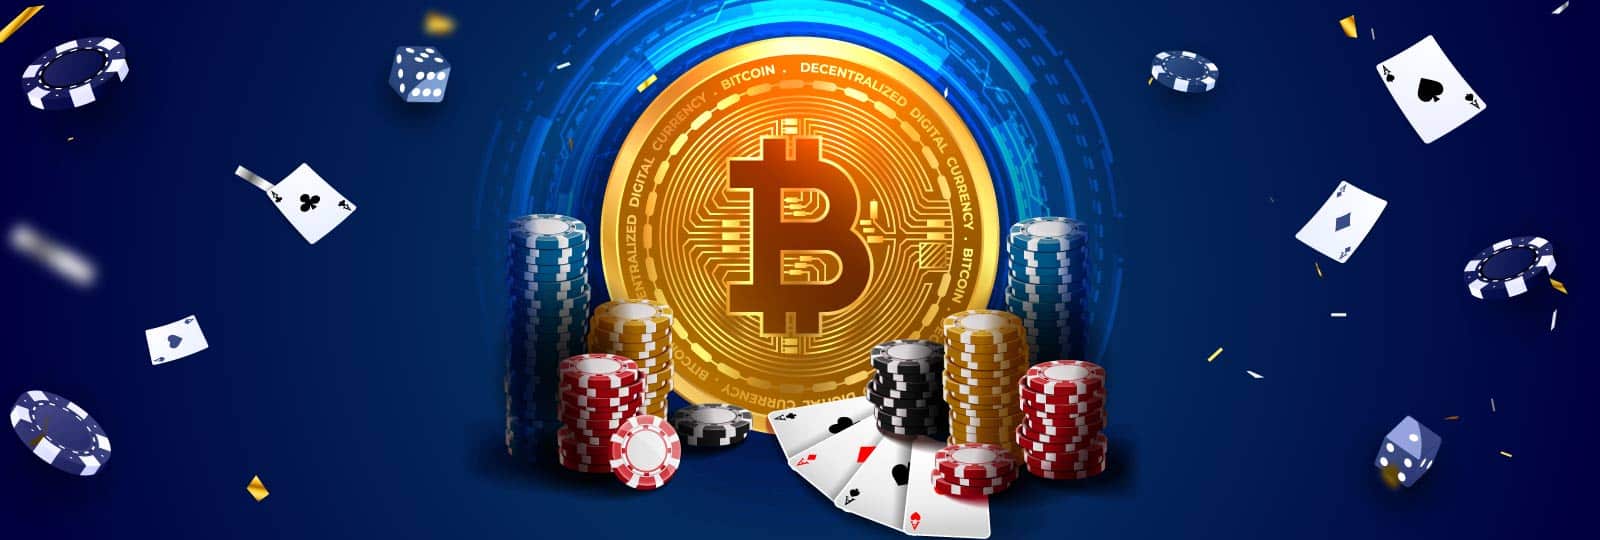 List of Best Anonymous Bitcoin Casinos & Bonuses March | GEM – Global Extra Money